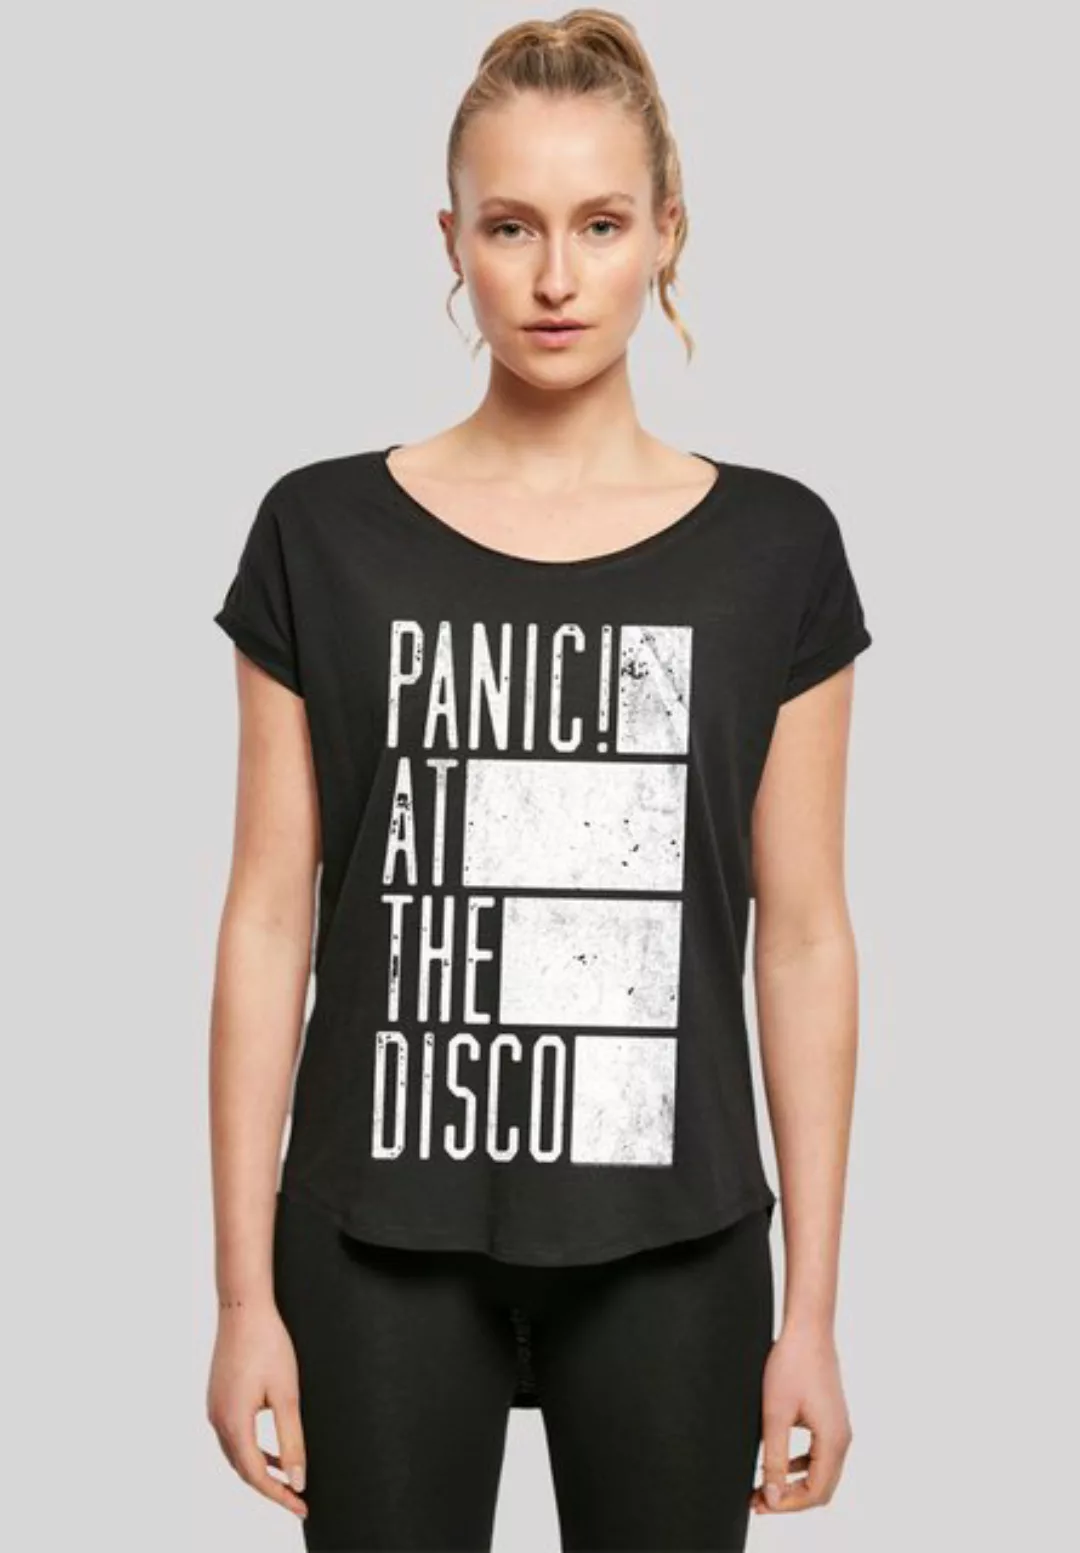 F4NT4STIC T-Shirt Panic At The Disco Block Text Premium Qualität günstig online kaufen